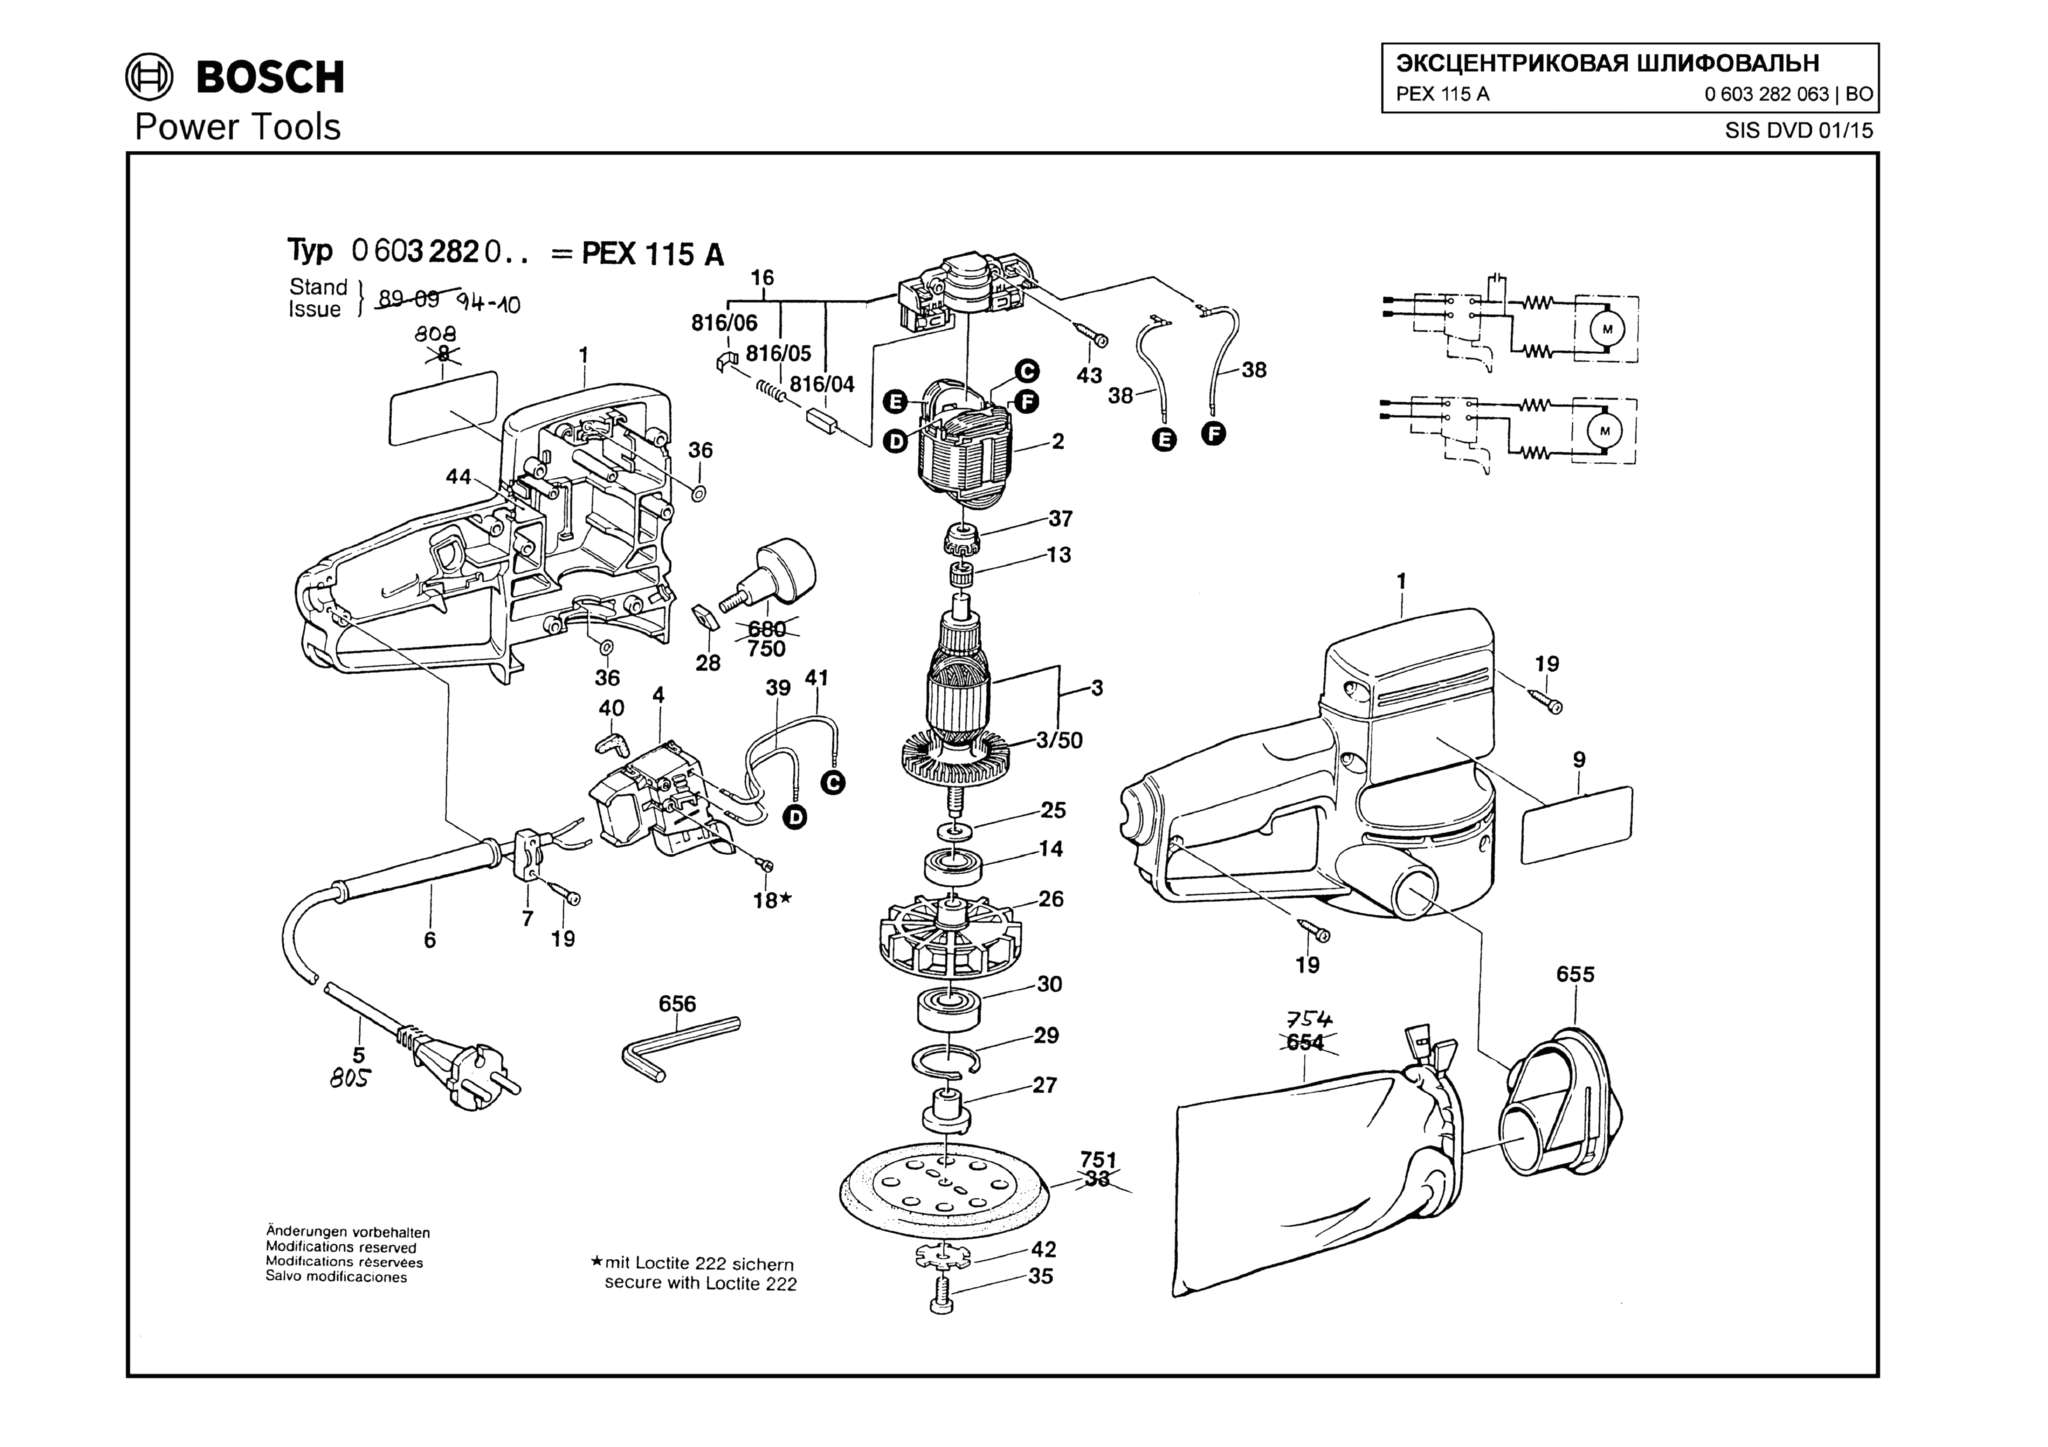 Запчасти, схема и деталировка Bosch PEX 115 A (ТИП 0603282063)